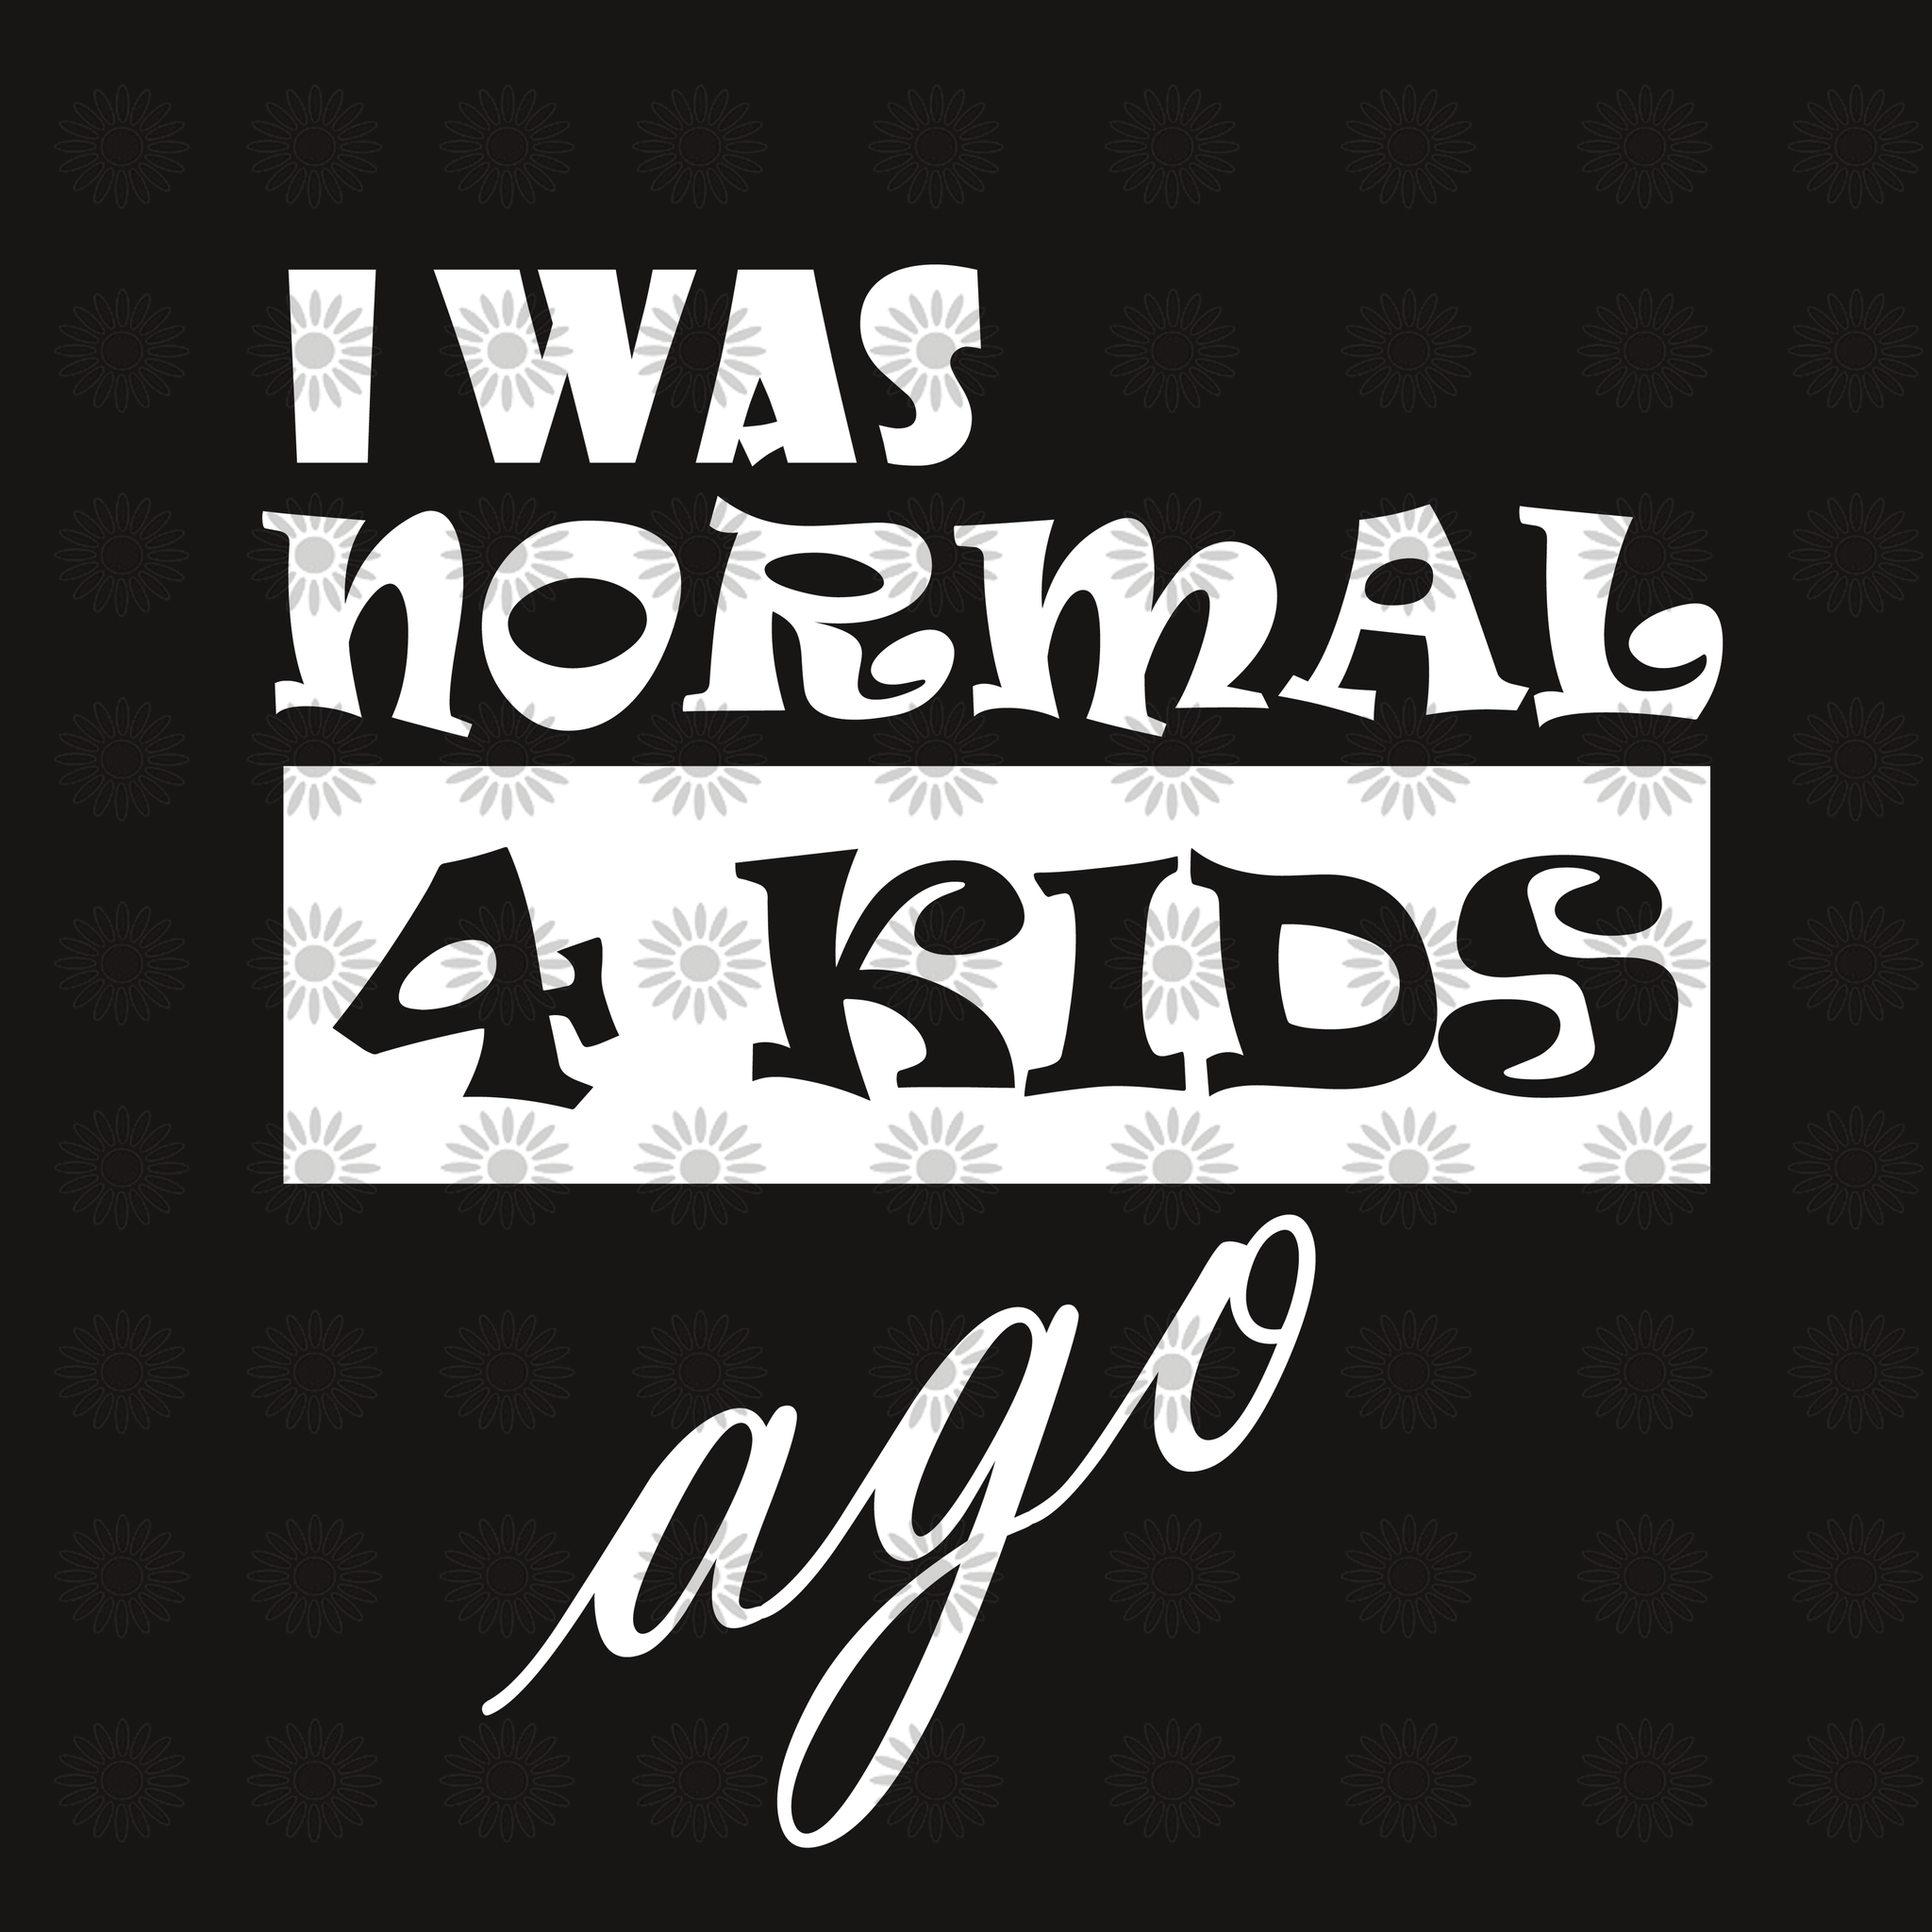 I was normal 4 kids ago svg, I was normal 4 kids ago, I was normal 4 kids ago png, funny quotes svg, png, eps, dxf file